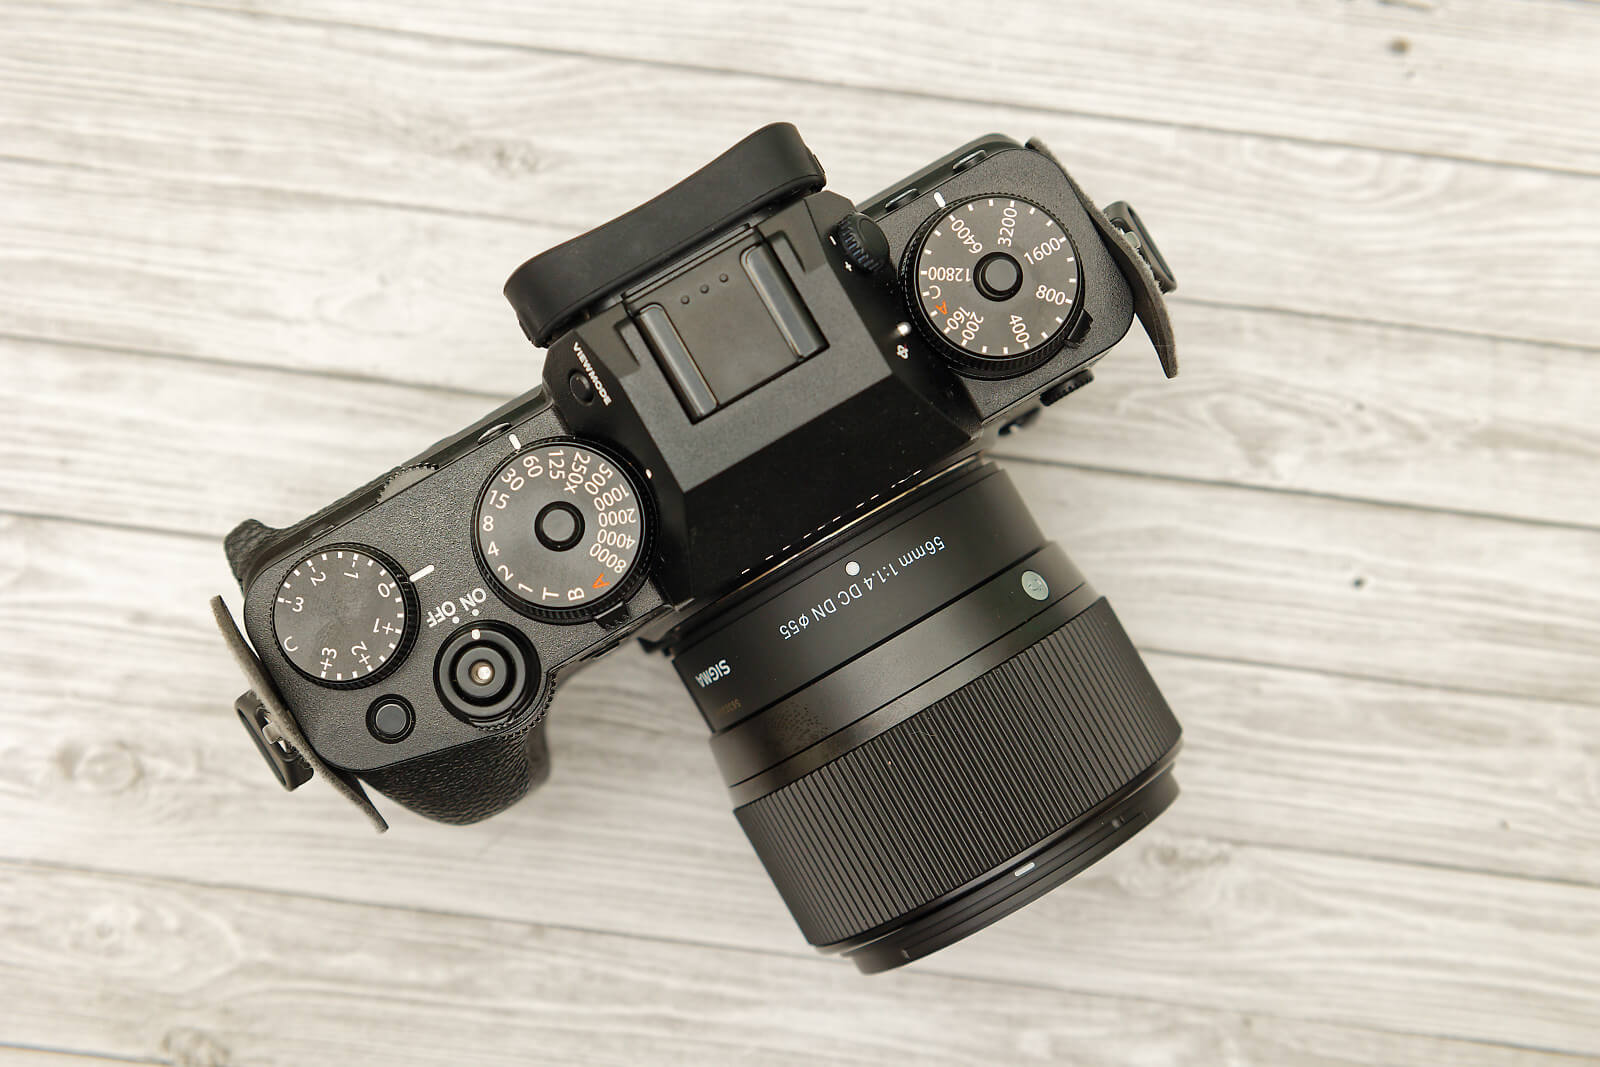 Dalset sarcoom Beukende Four wallet-friendly X mount lenses that make Fujifilm portraits pop